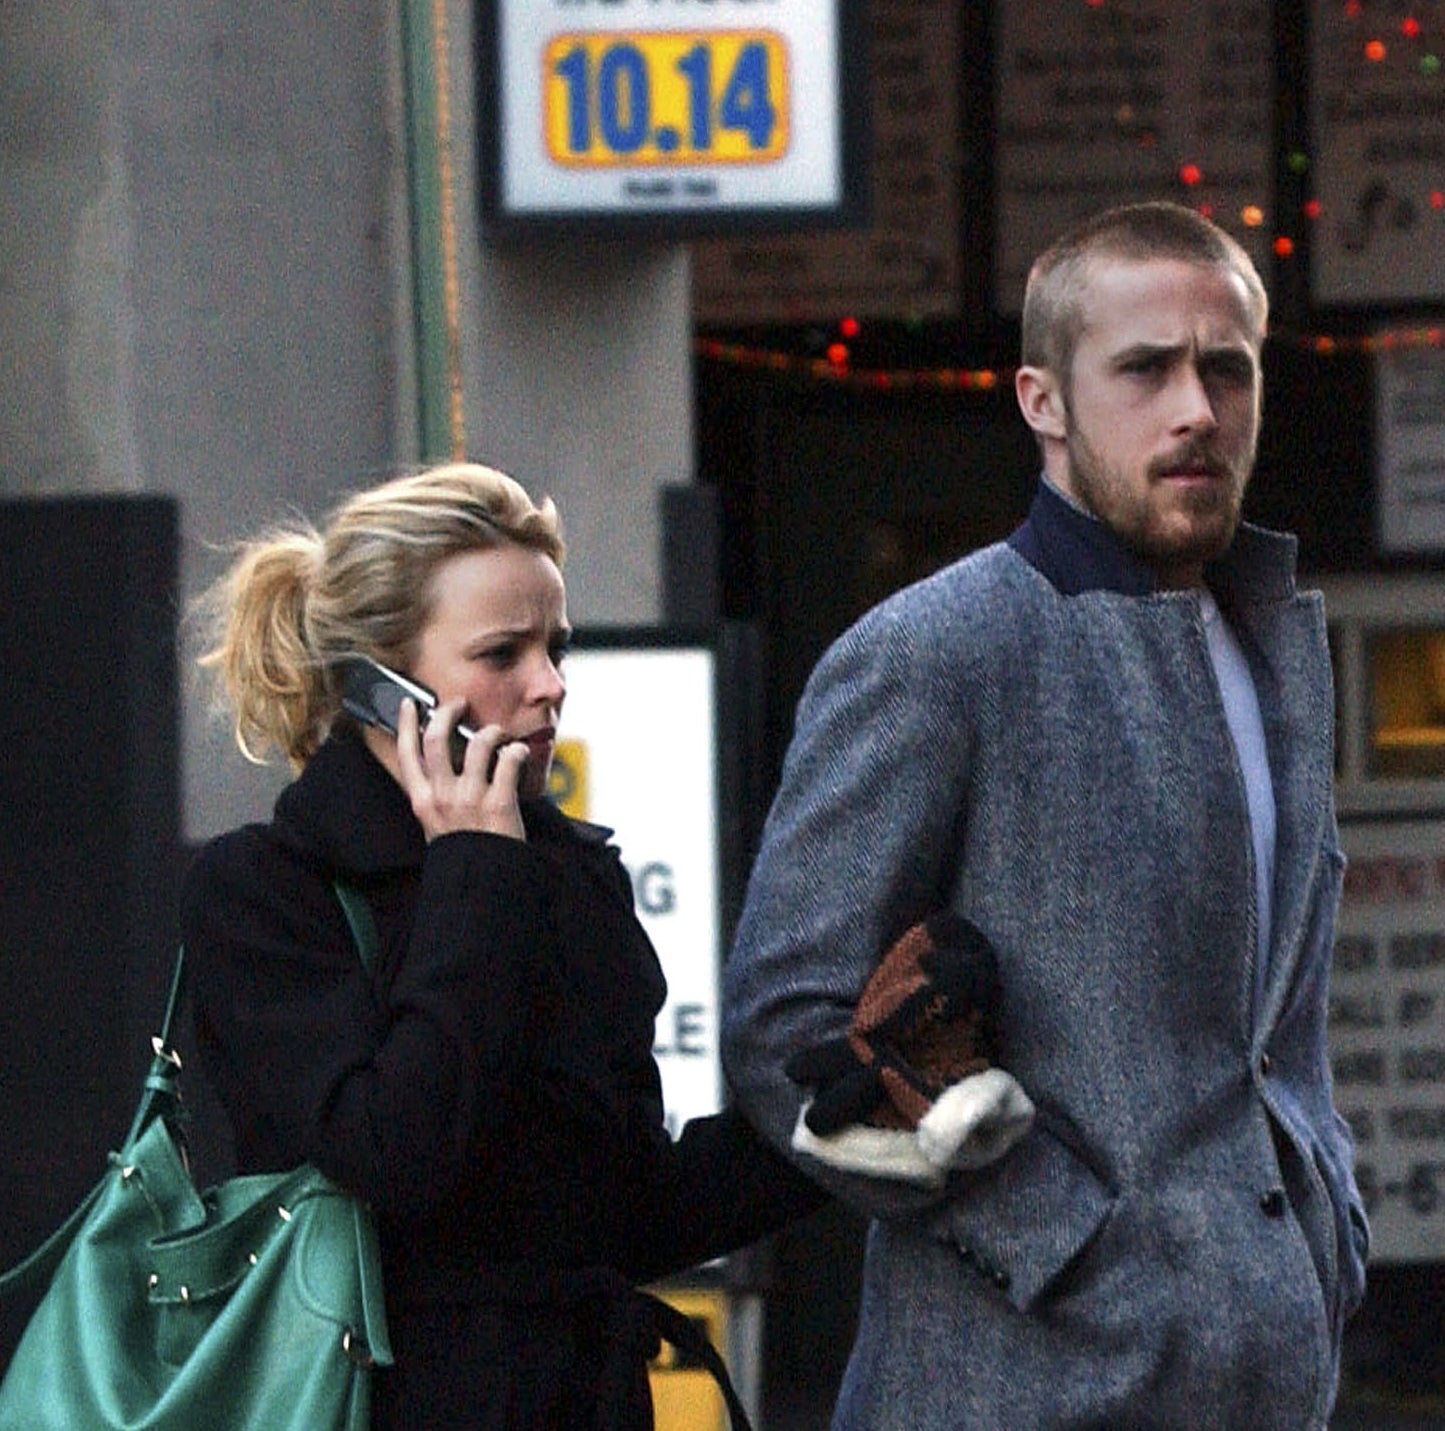 Rachel McAdams and her boyfriend Ryan Gosling walk in Soho